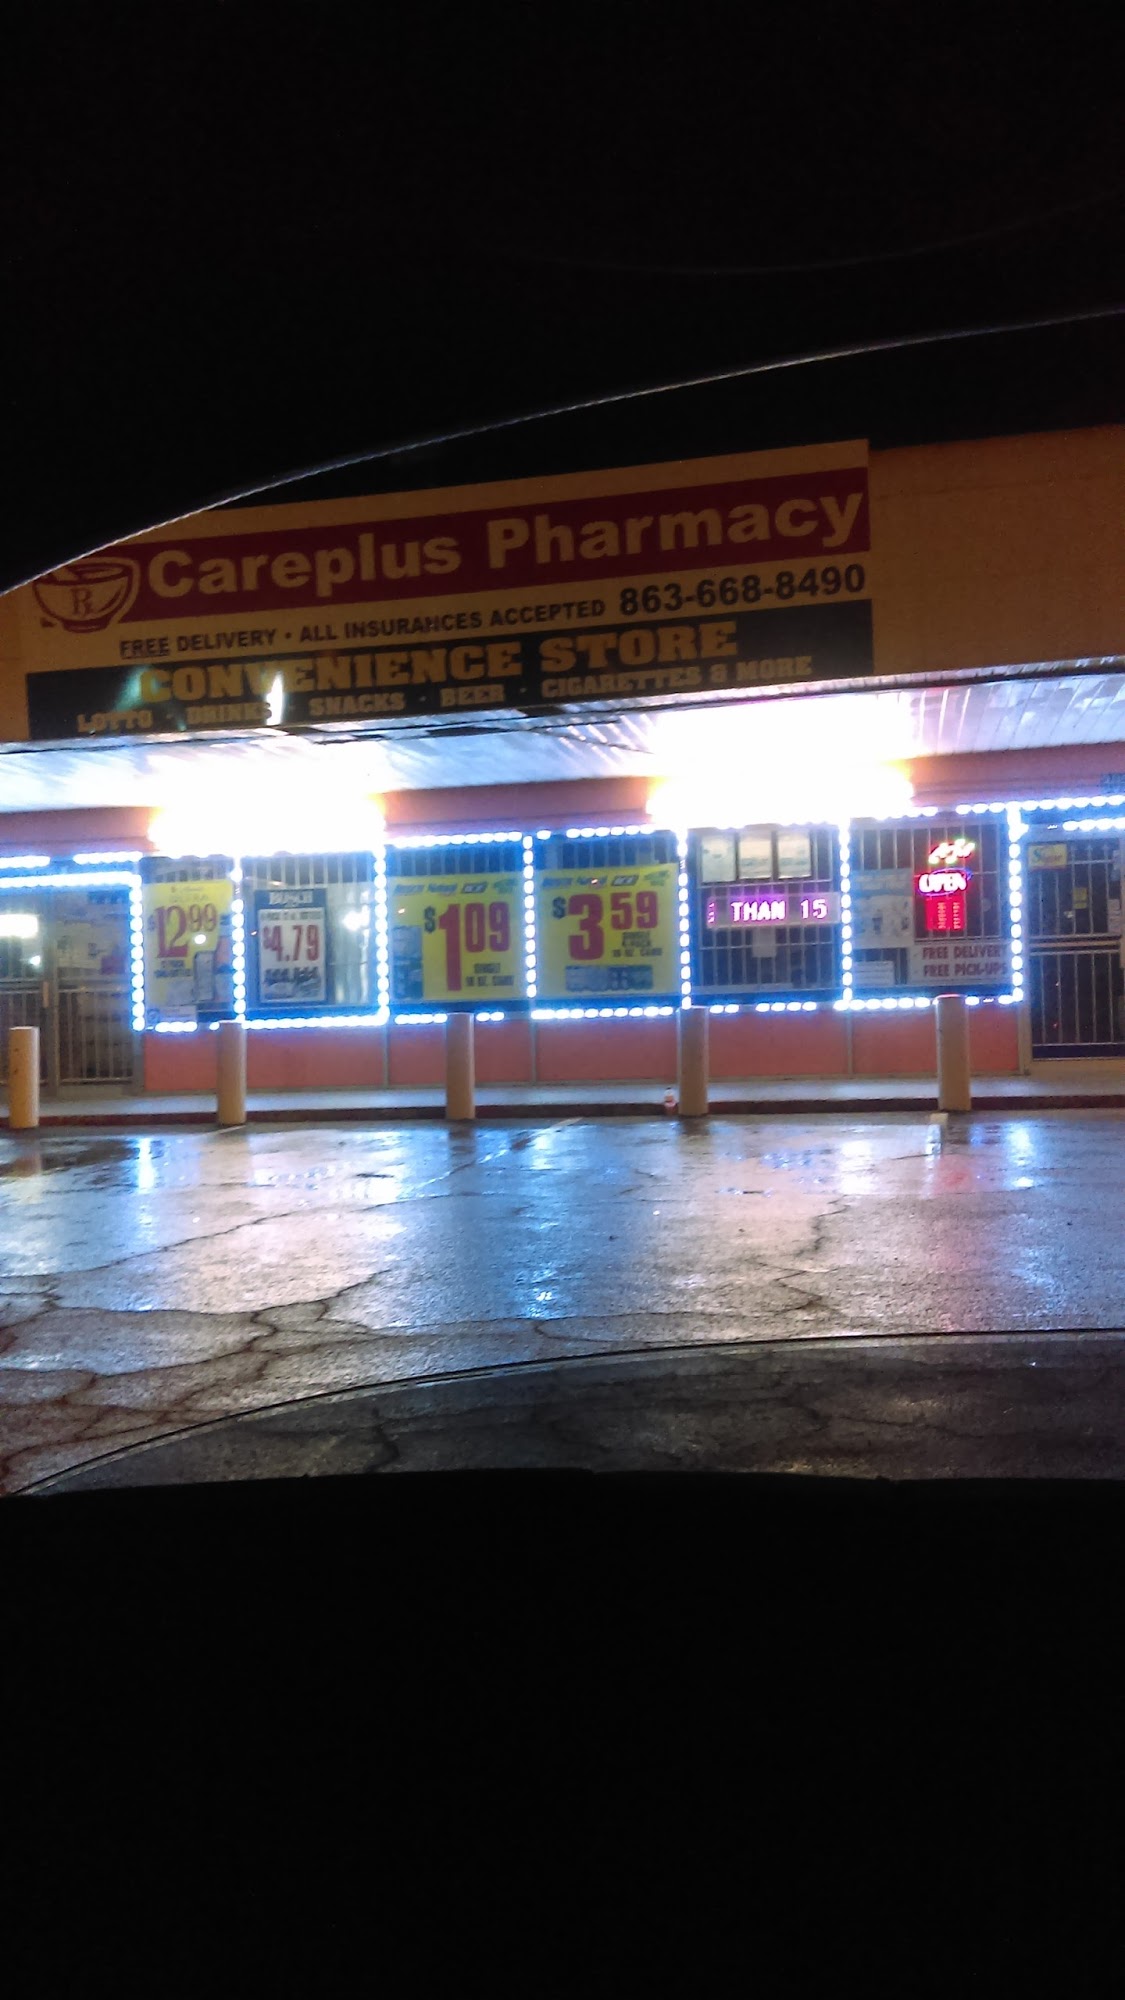 Careplus Pharmacy